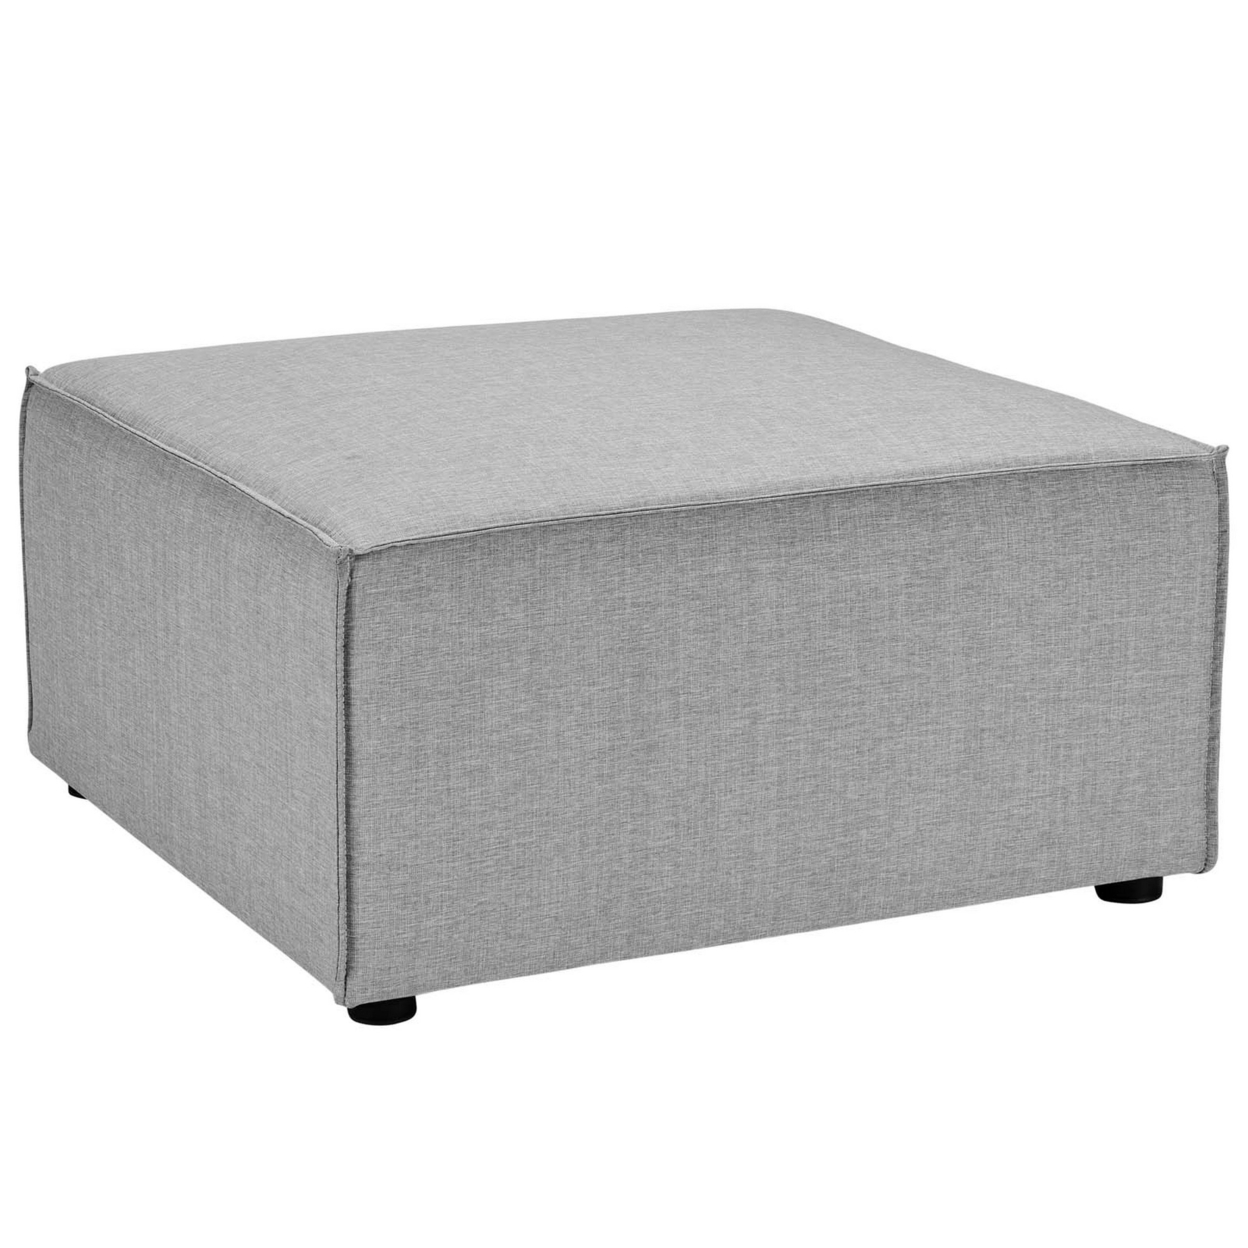 Saybrook Outdoor Patio Upholstered Sectional Sofa Ottoman, Gray